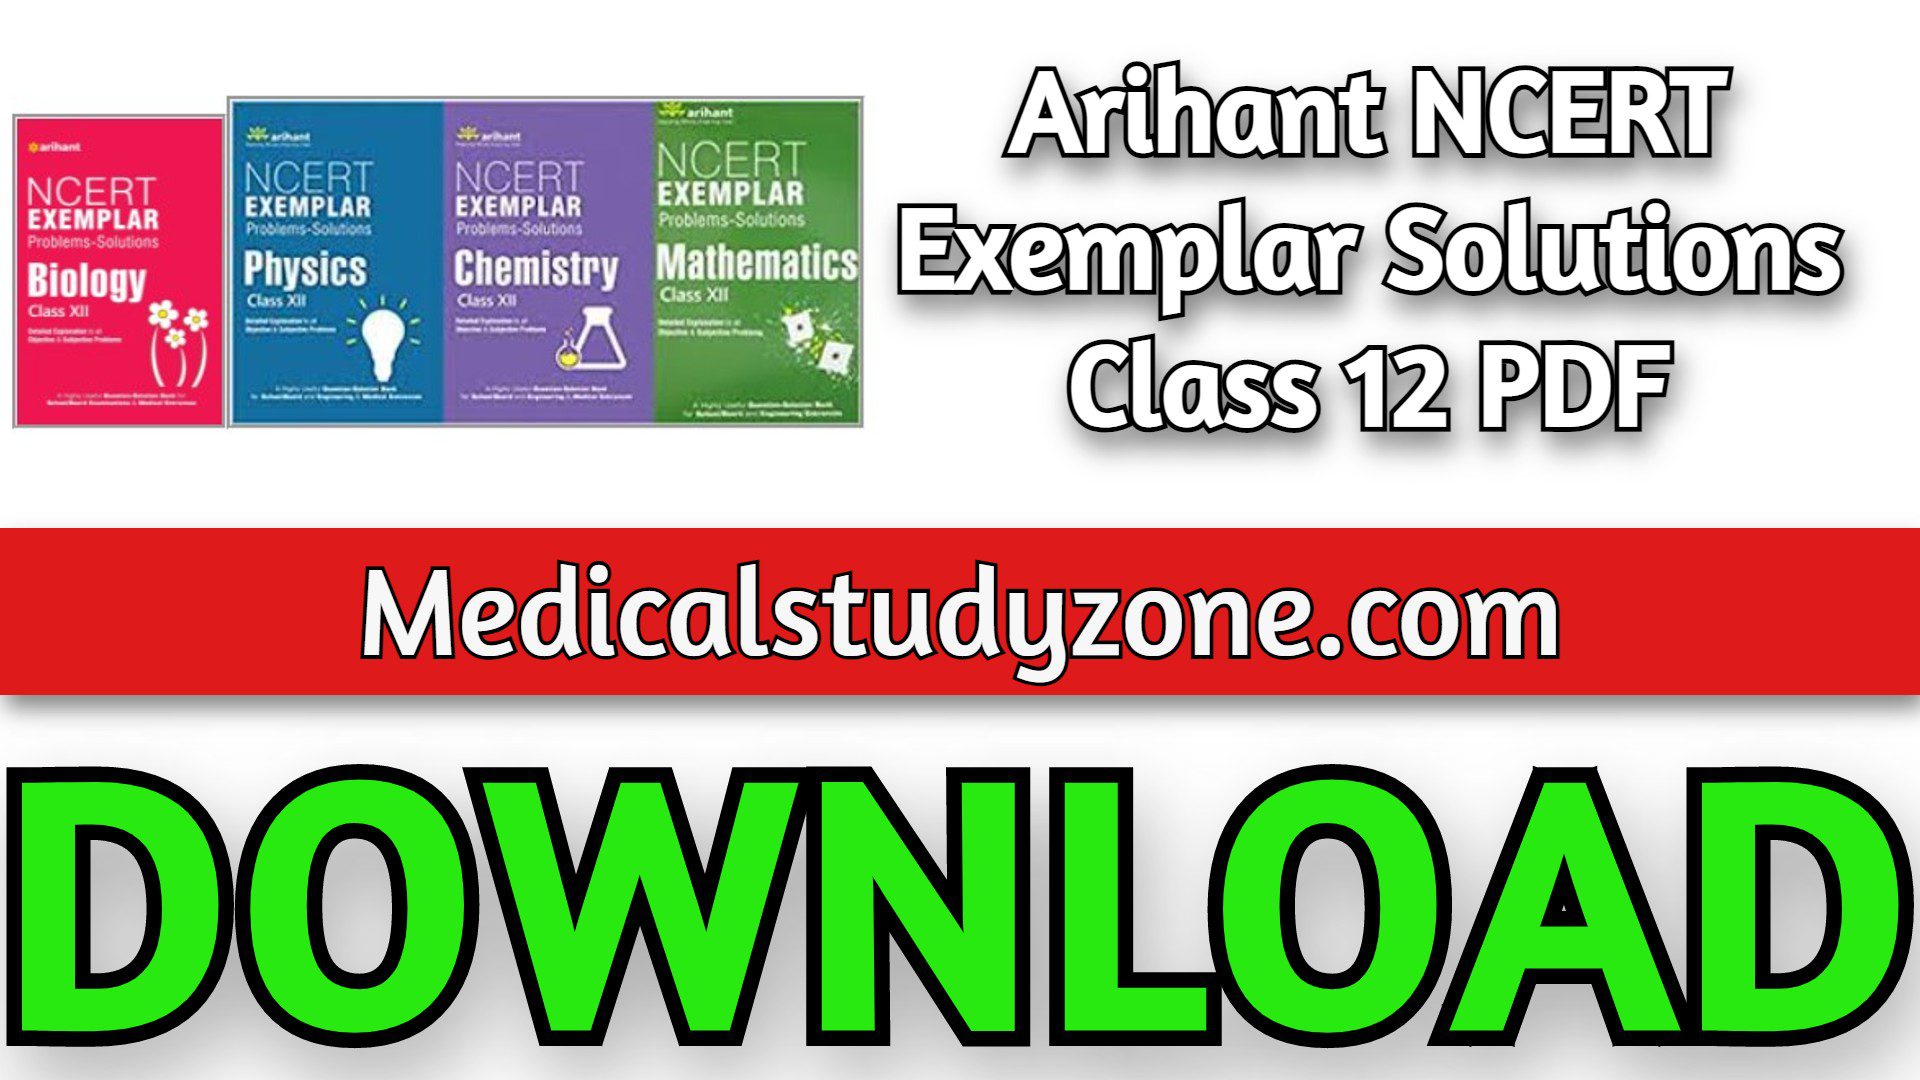 Arihant NCERT Exemplar Solutions Class 12 PDF Free Download